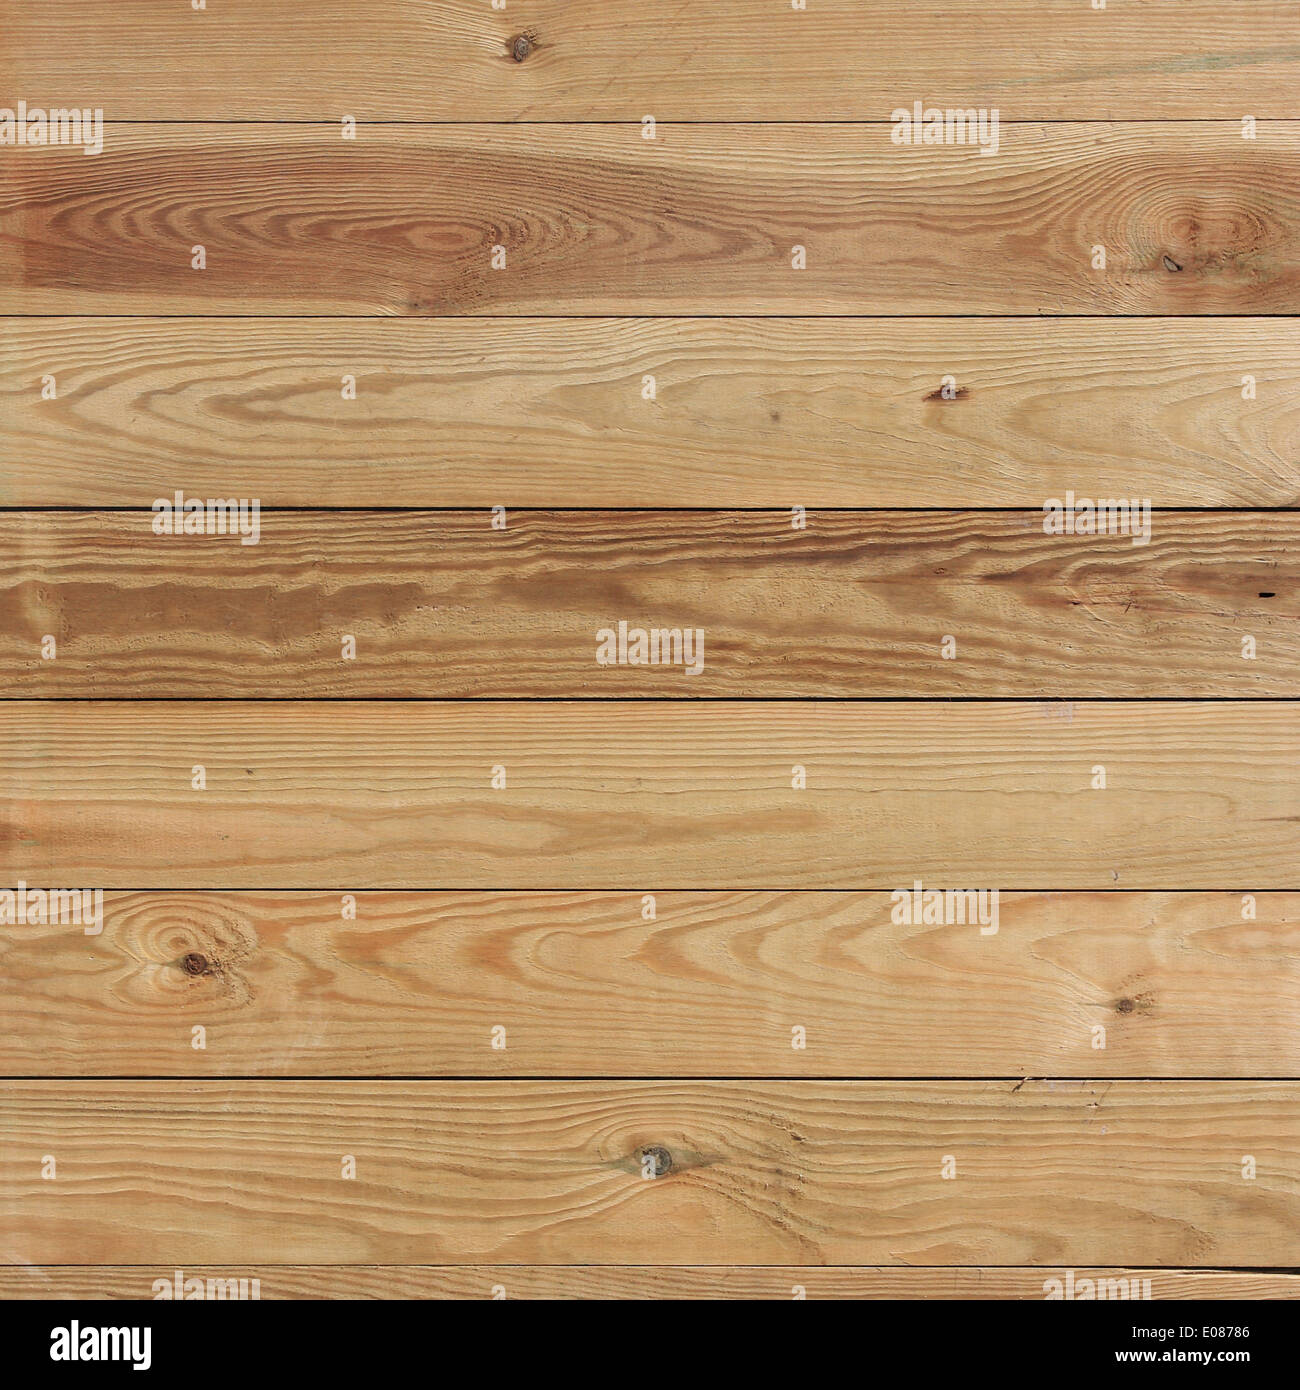 Wooden plank board background Stock Photo by ©seregam 322918902